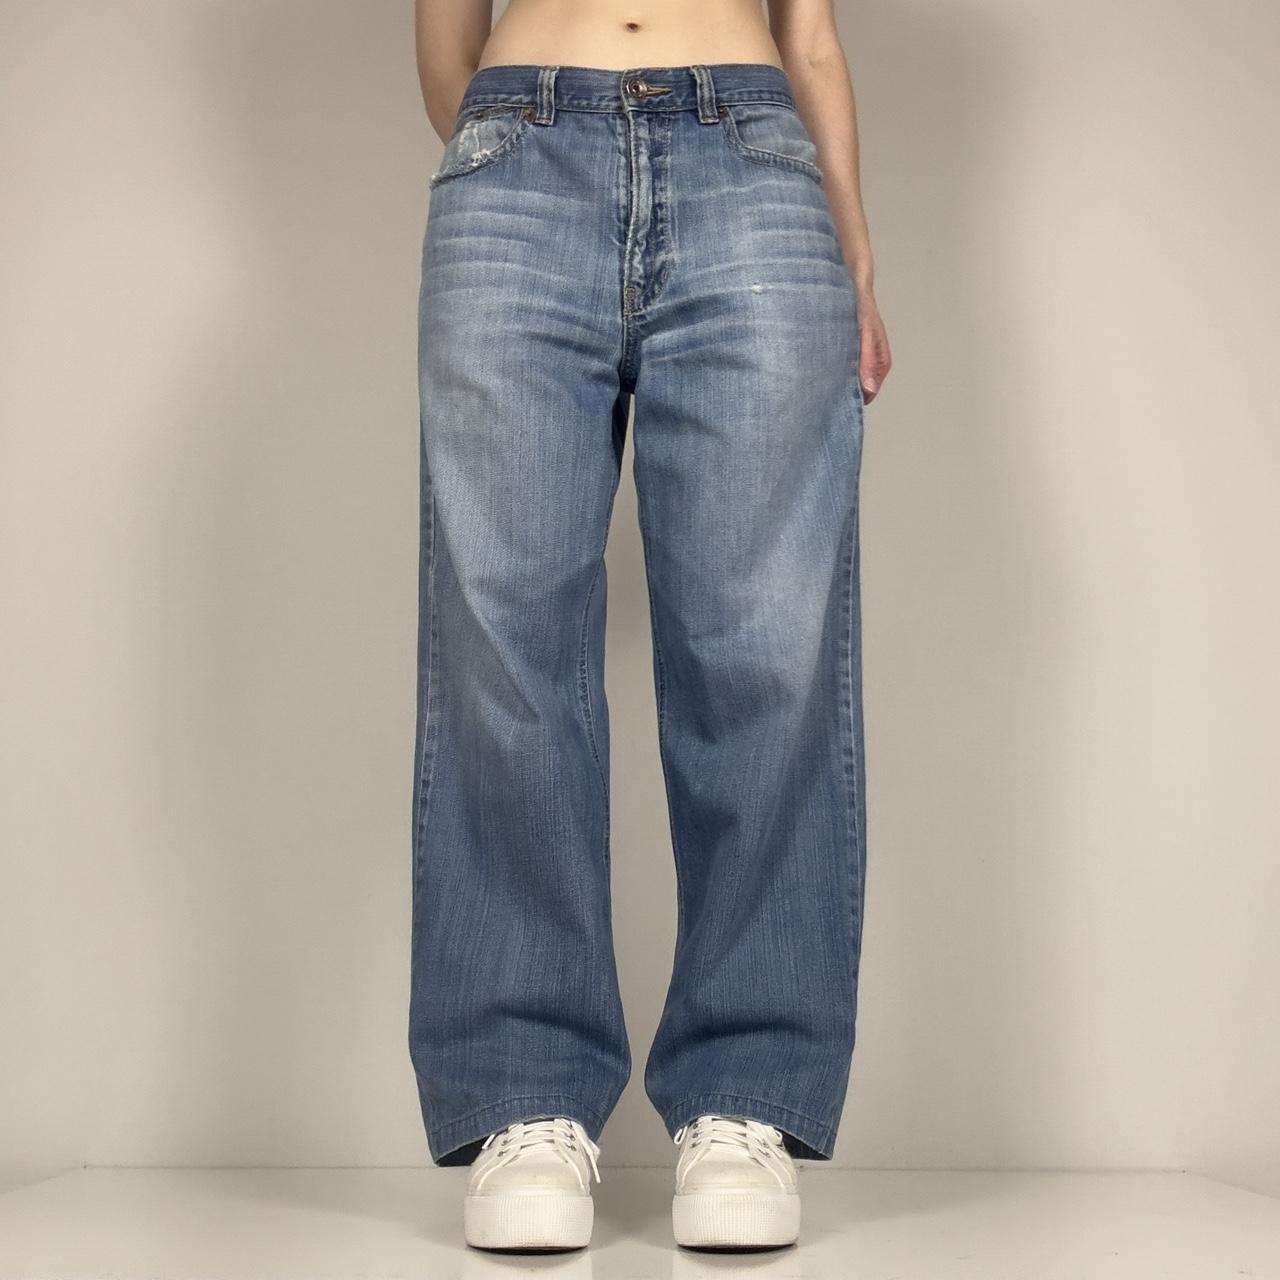 DKNY Men's Blue Jeans (5)